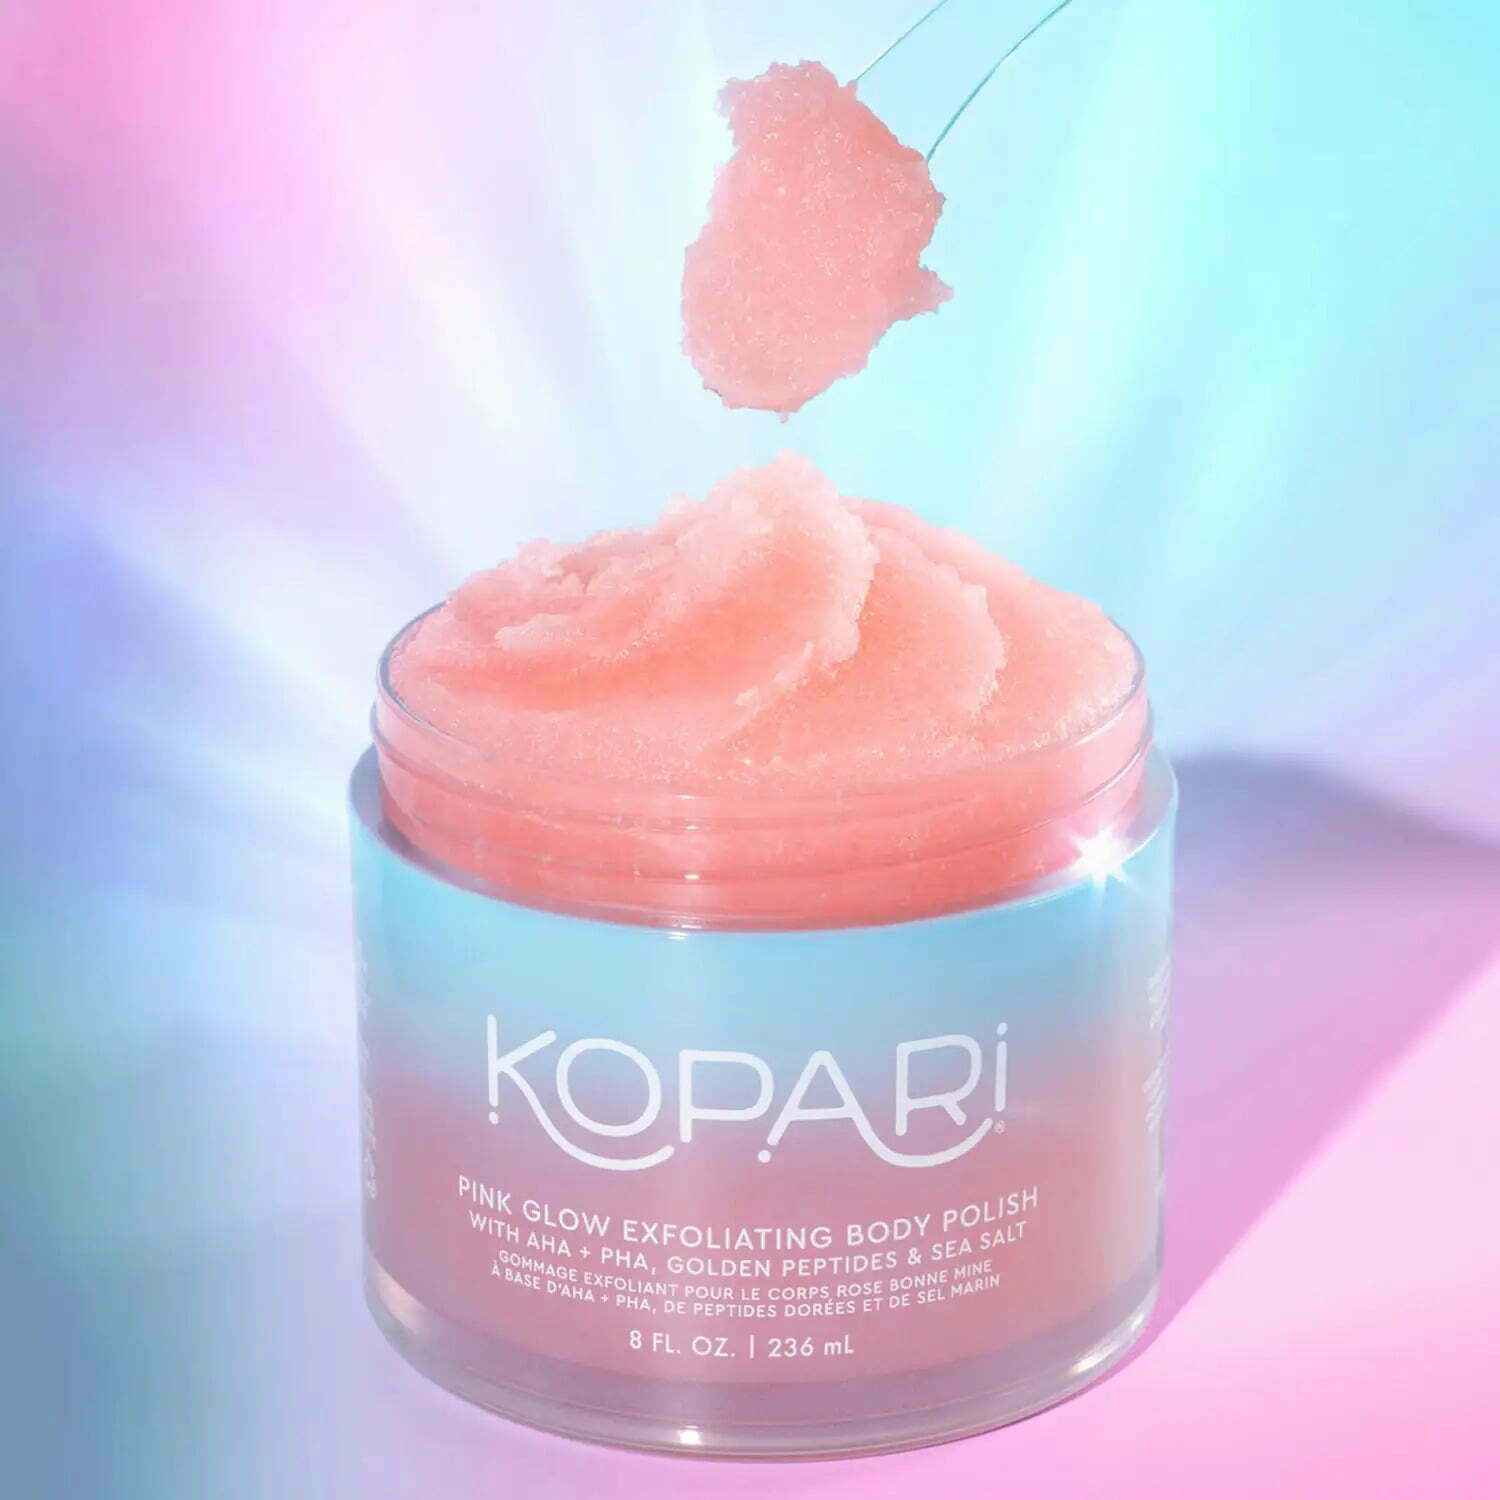 Kopari Pink Glow Exfoliating Body Polish